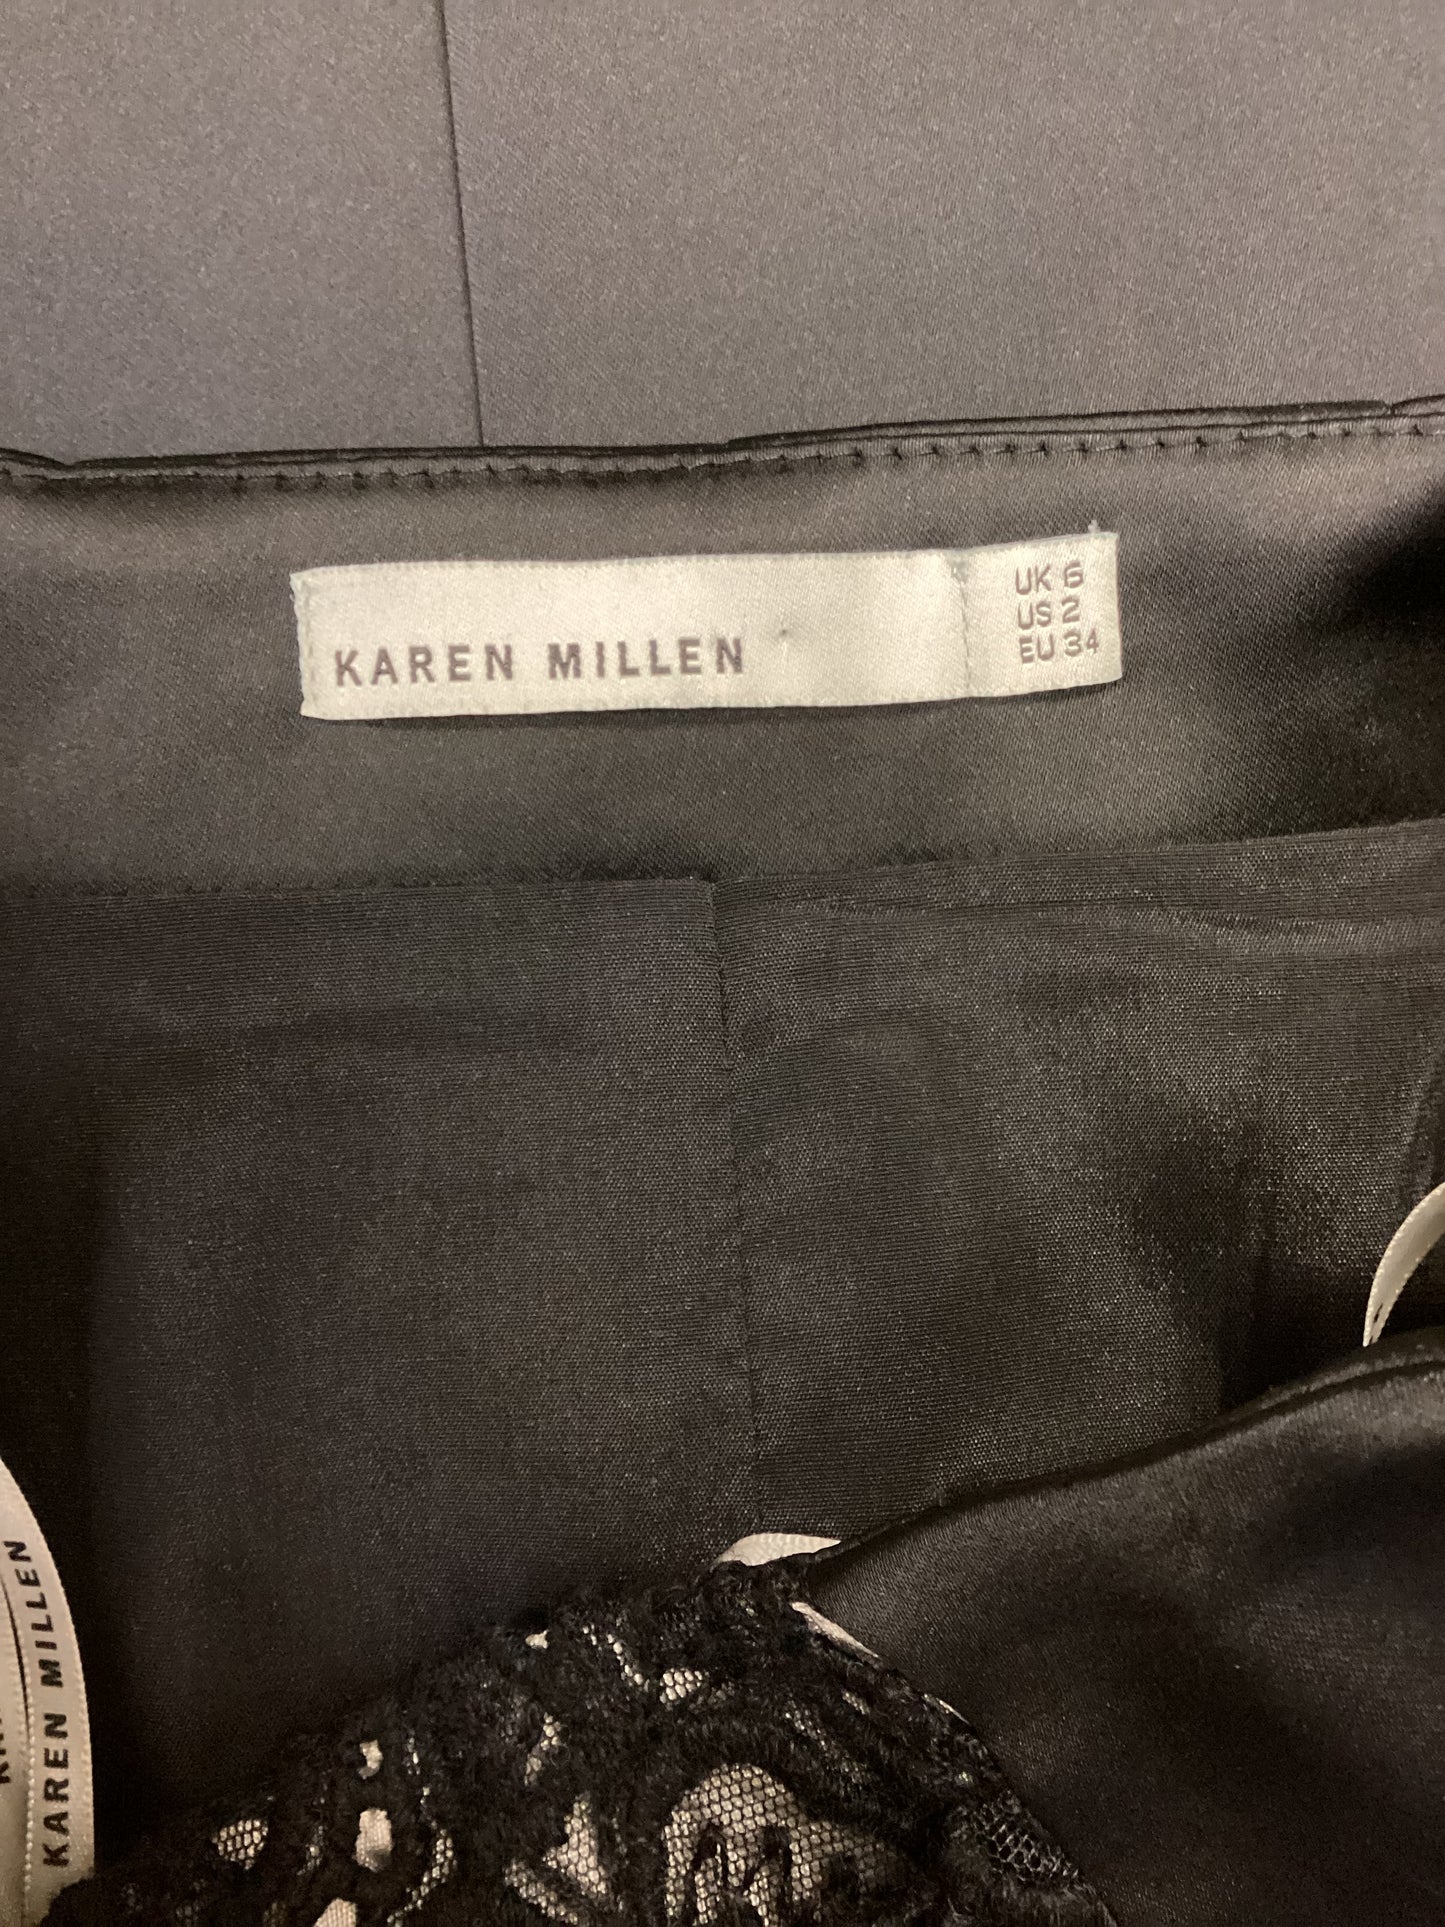 Karen Millen Black Detail Skirt Size 6/XS